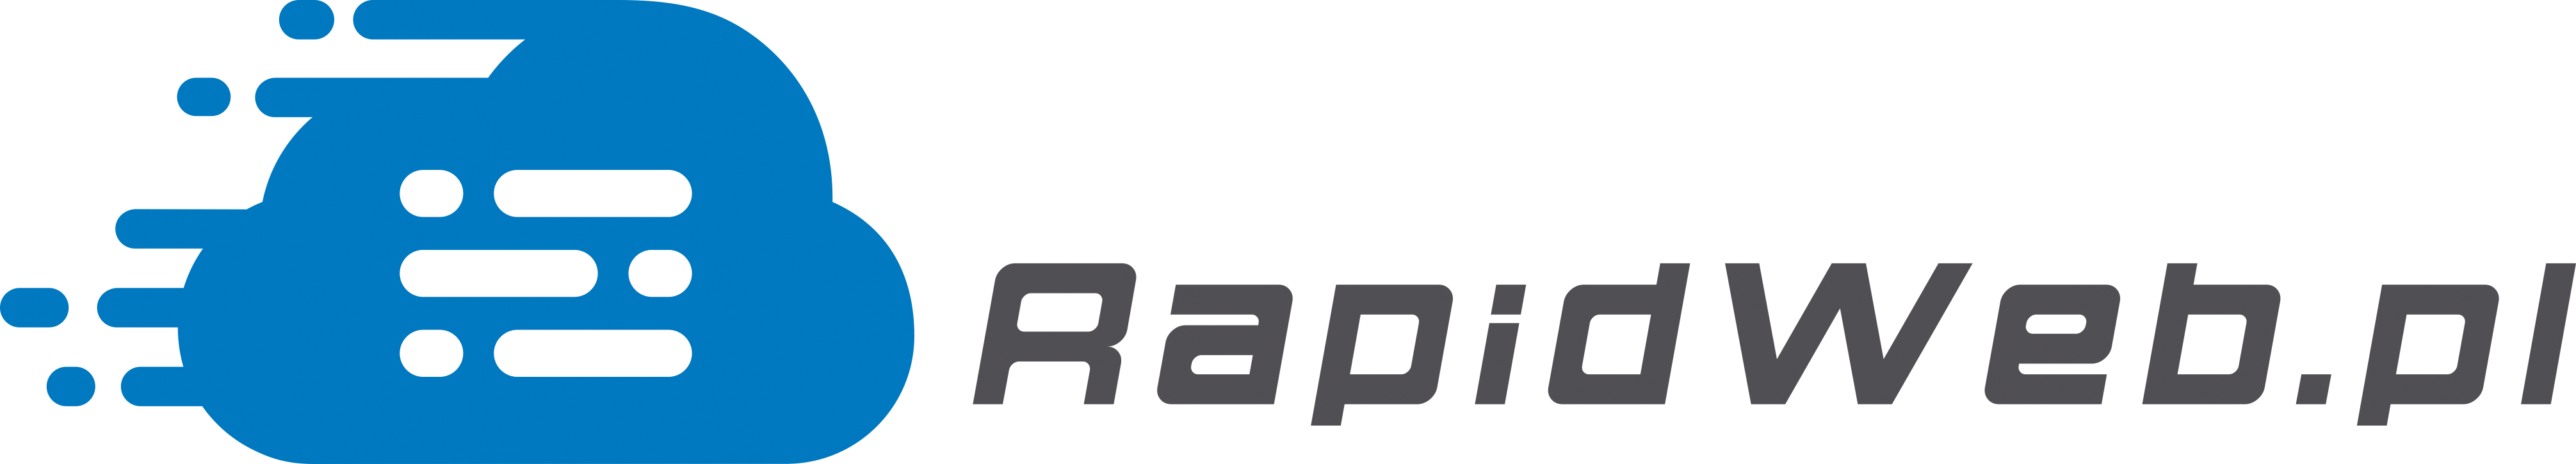 RapidWeb.pl